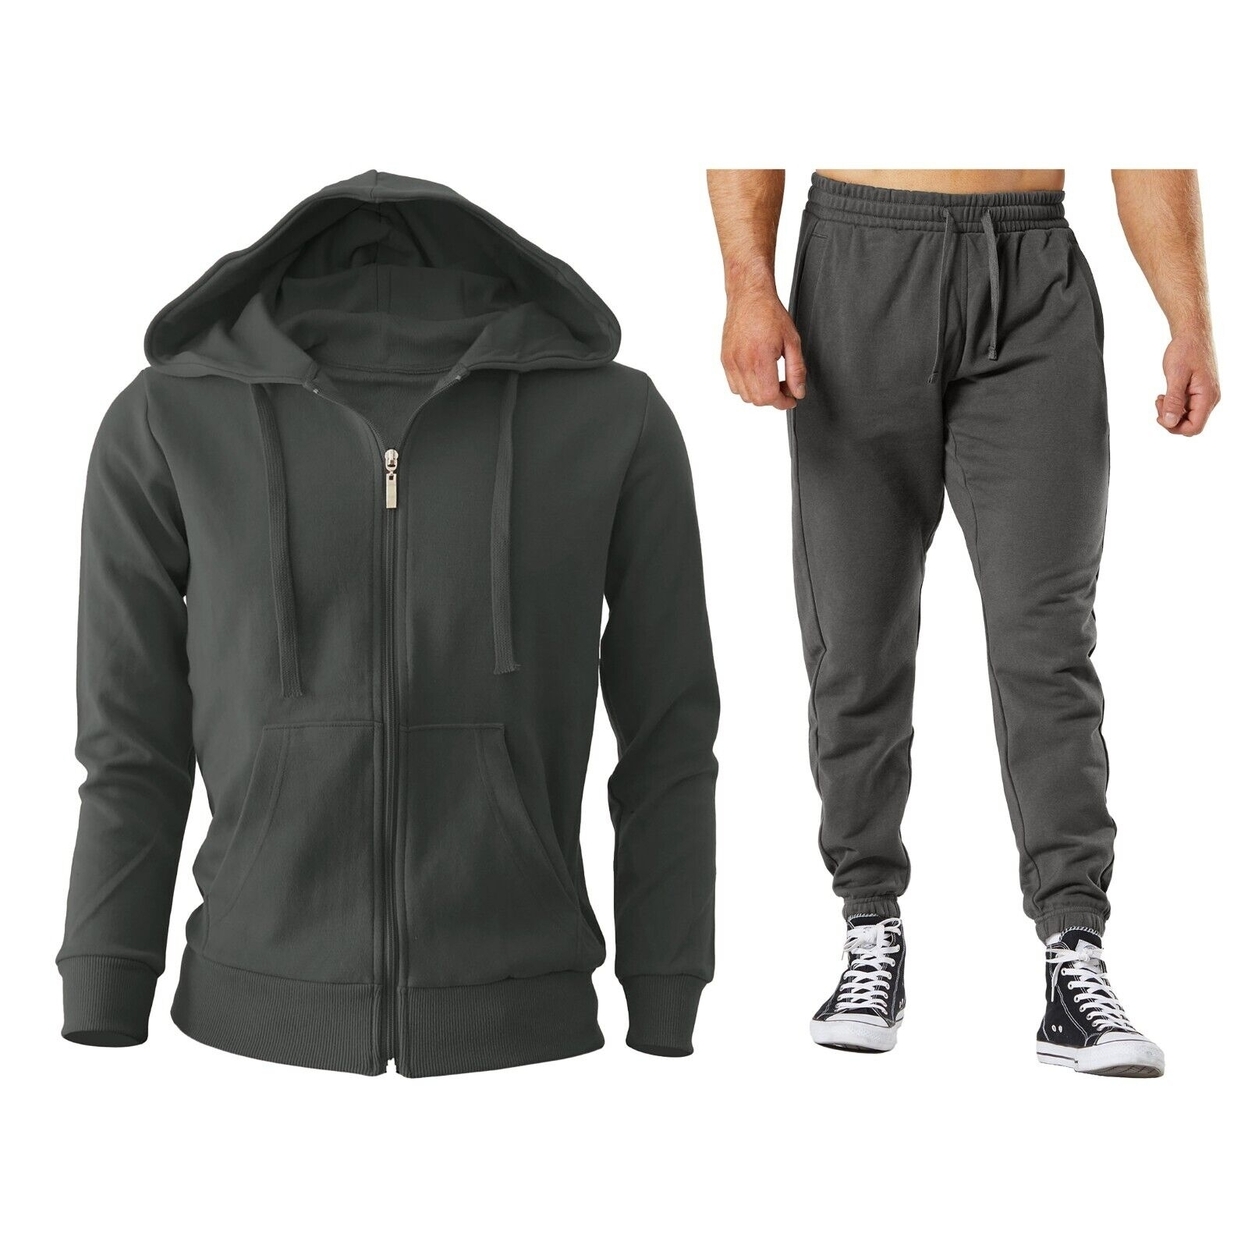 2-Piece: Men's Winter Warm Cozy Athletic Multi-Pockets BIG & TALL Sweatsuit Set - Charcoal, Medium